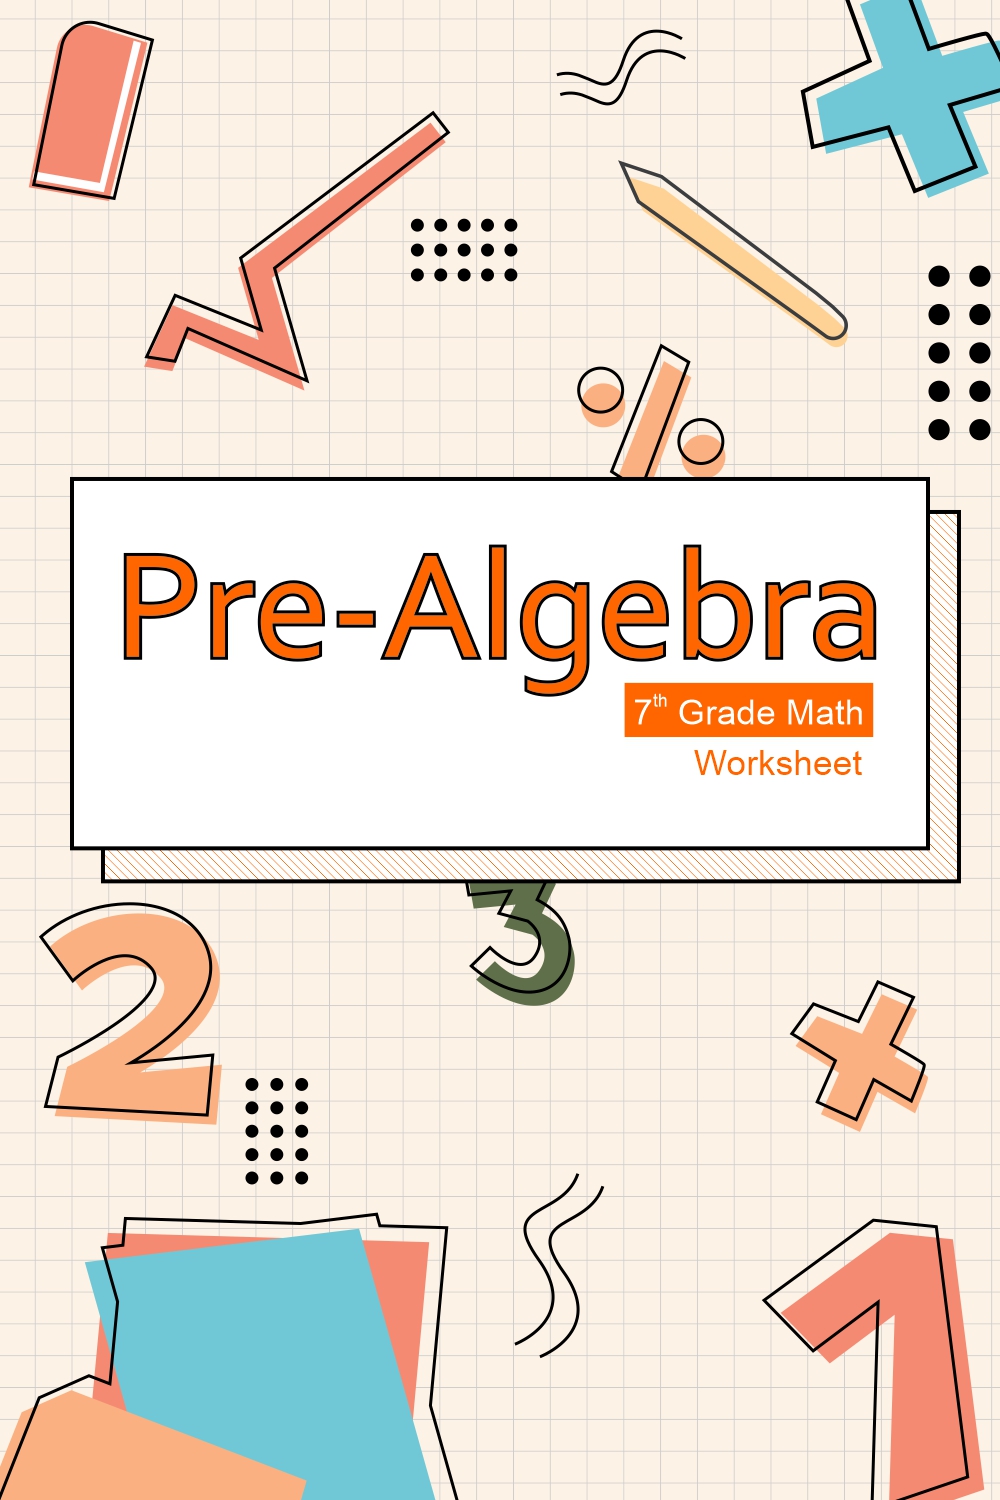 15 Images of Pre-Algebra 7th Grade Math Worksheets